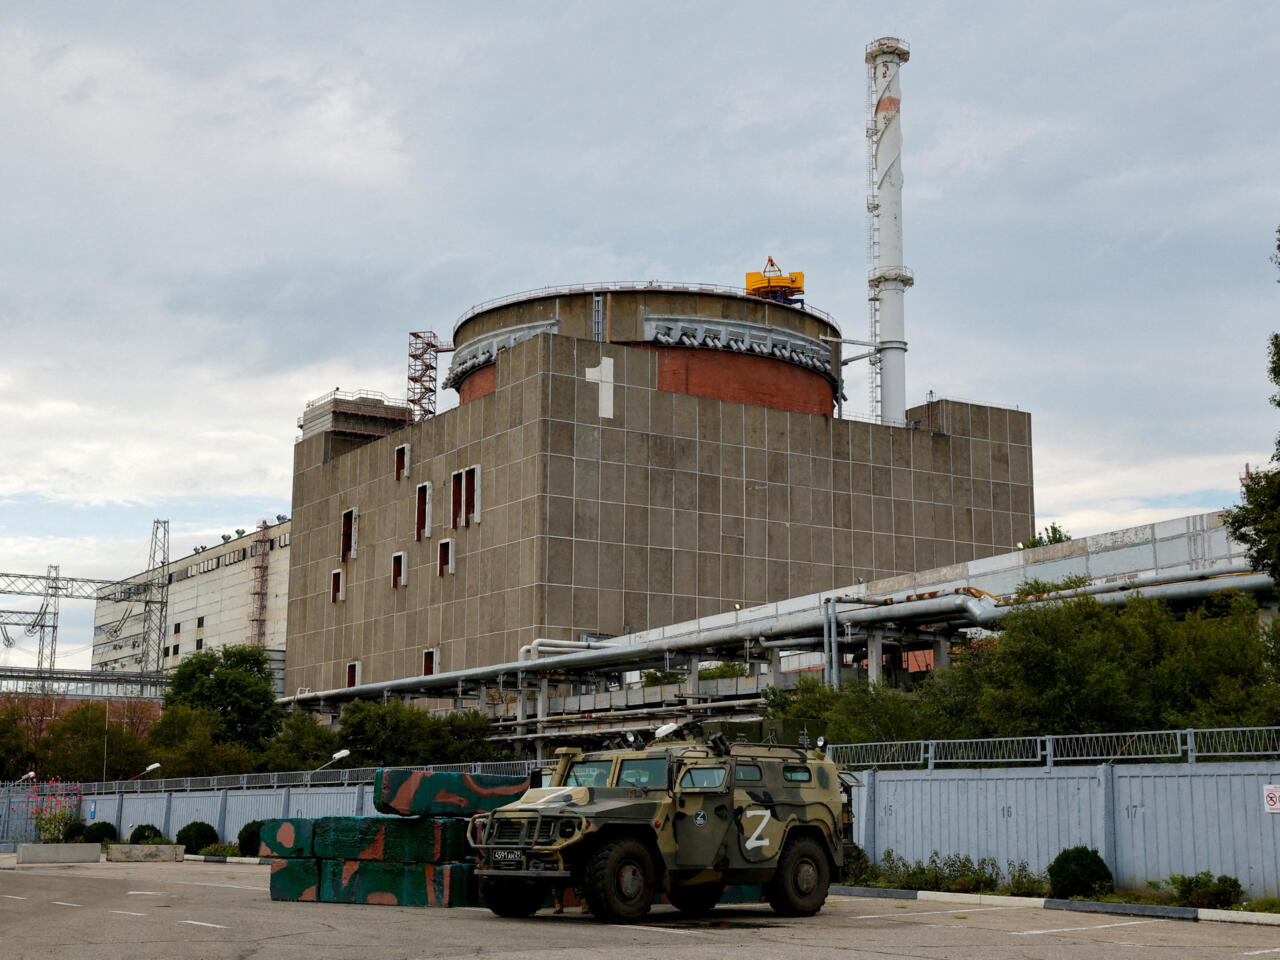 agjencia nderkombetare e energjise atomike jep alarmin sulmet vene ne rrezik sigurine ne centralin e zaporizhzhia s